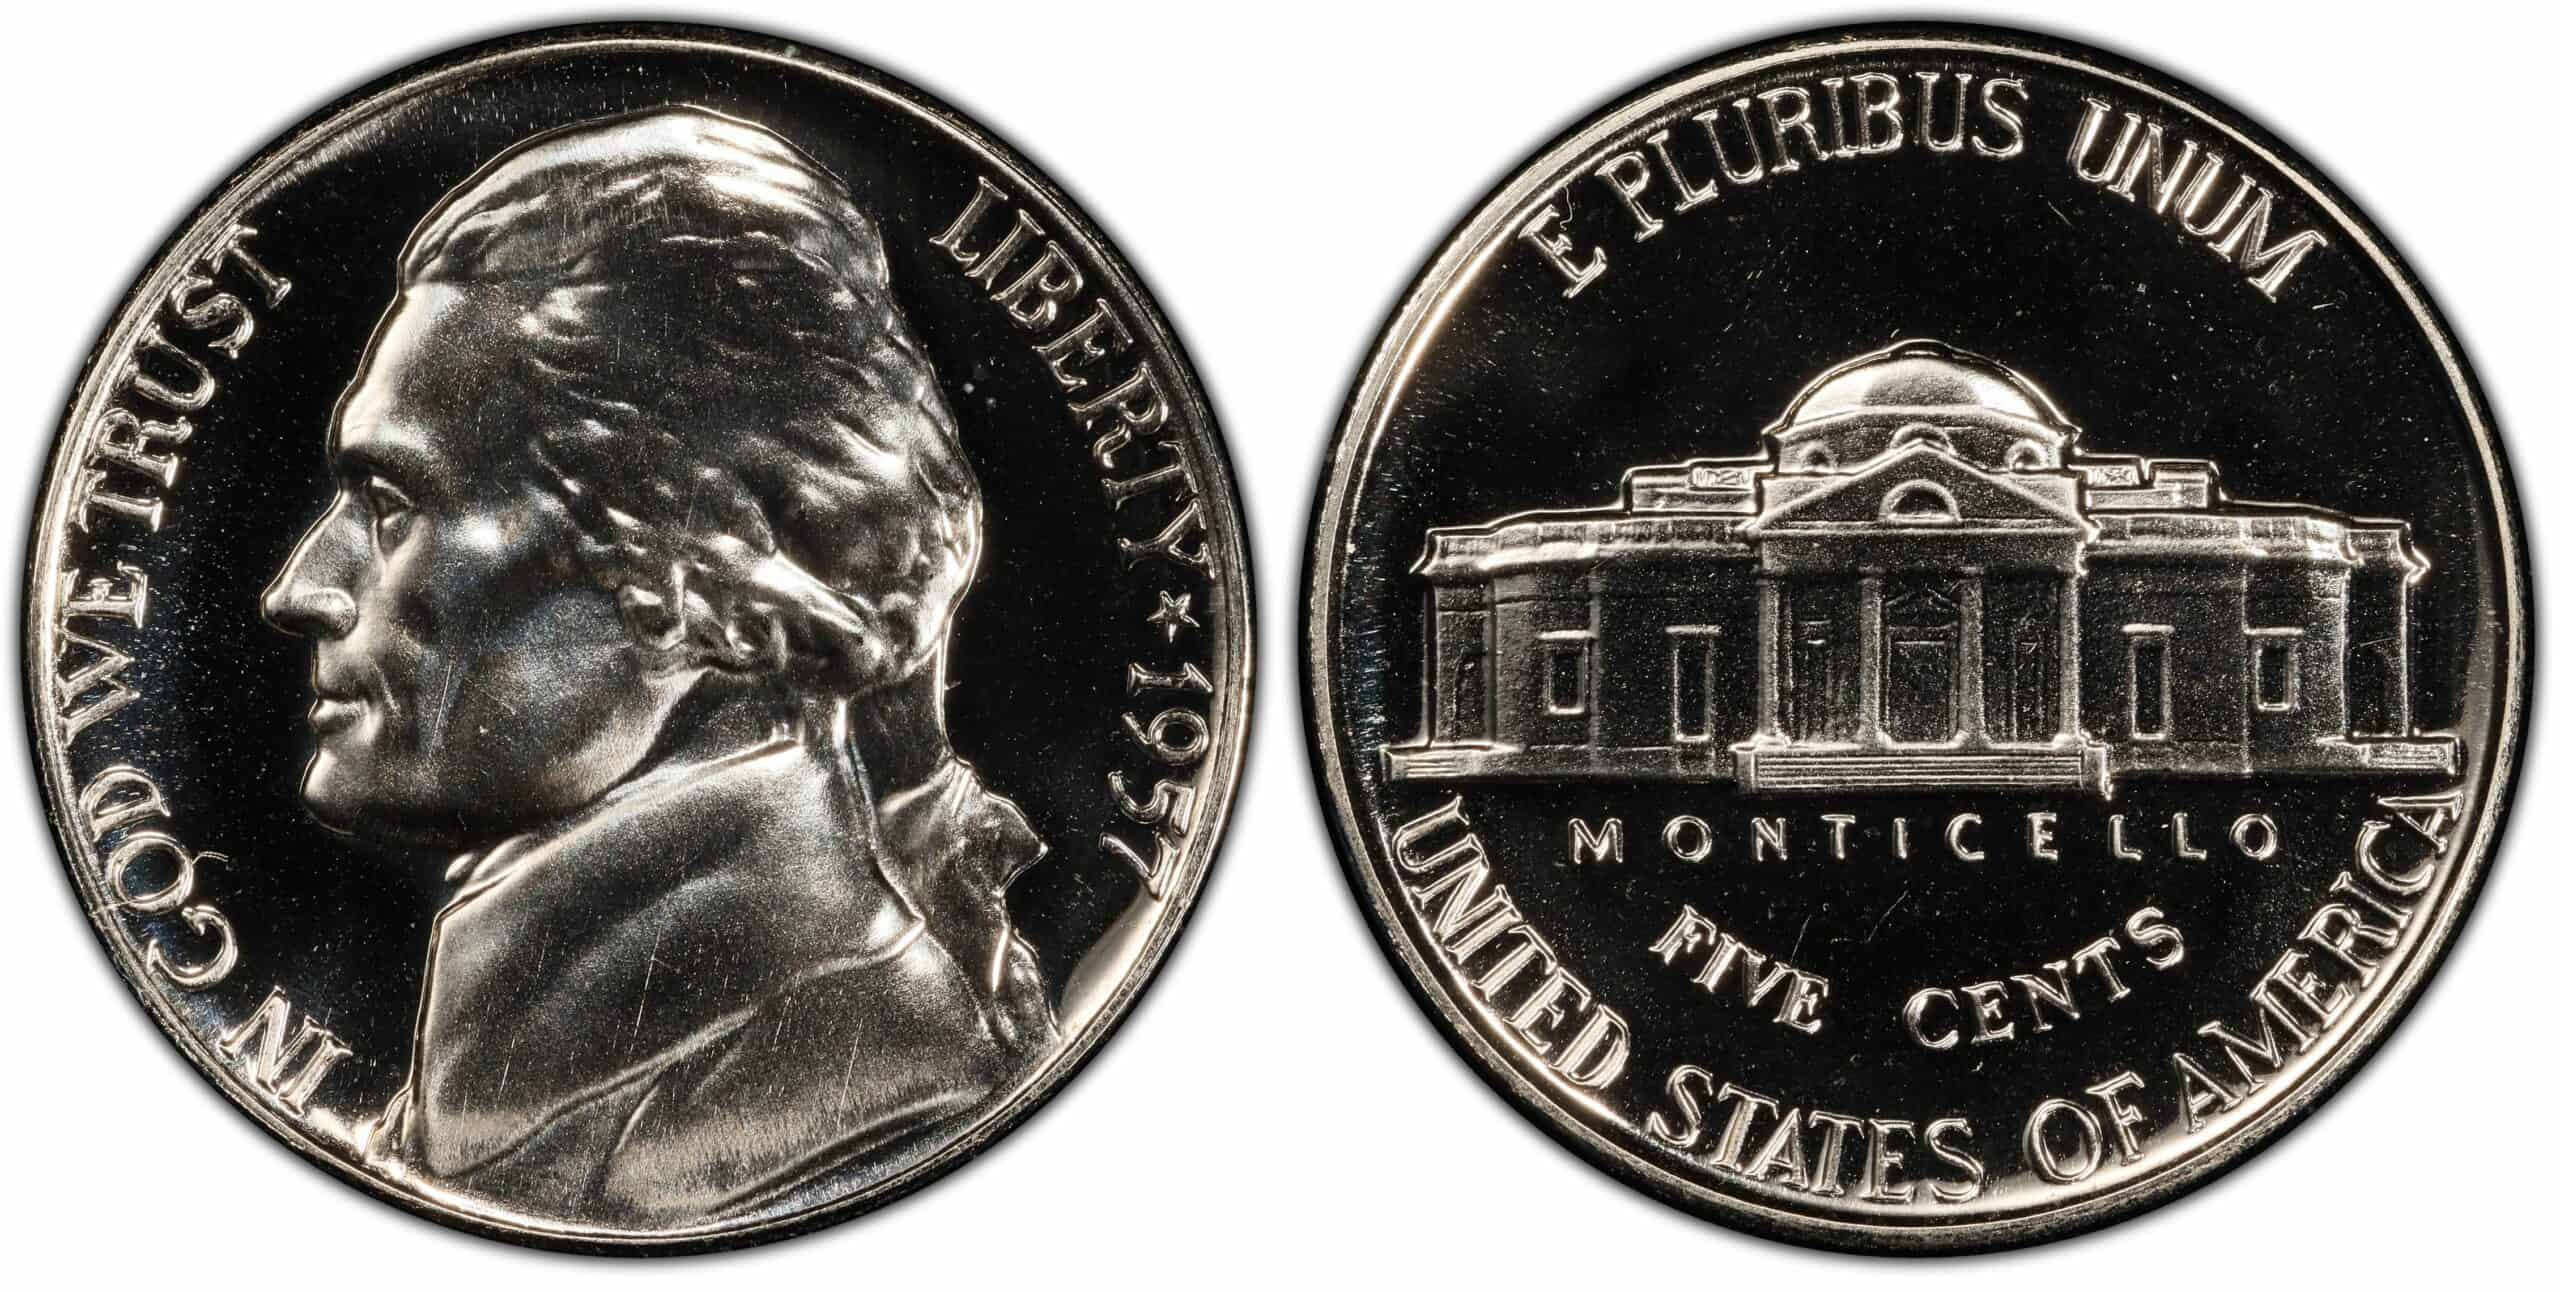 Proof 1957 Jefferson nickel Value